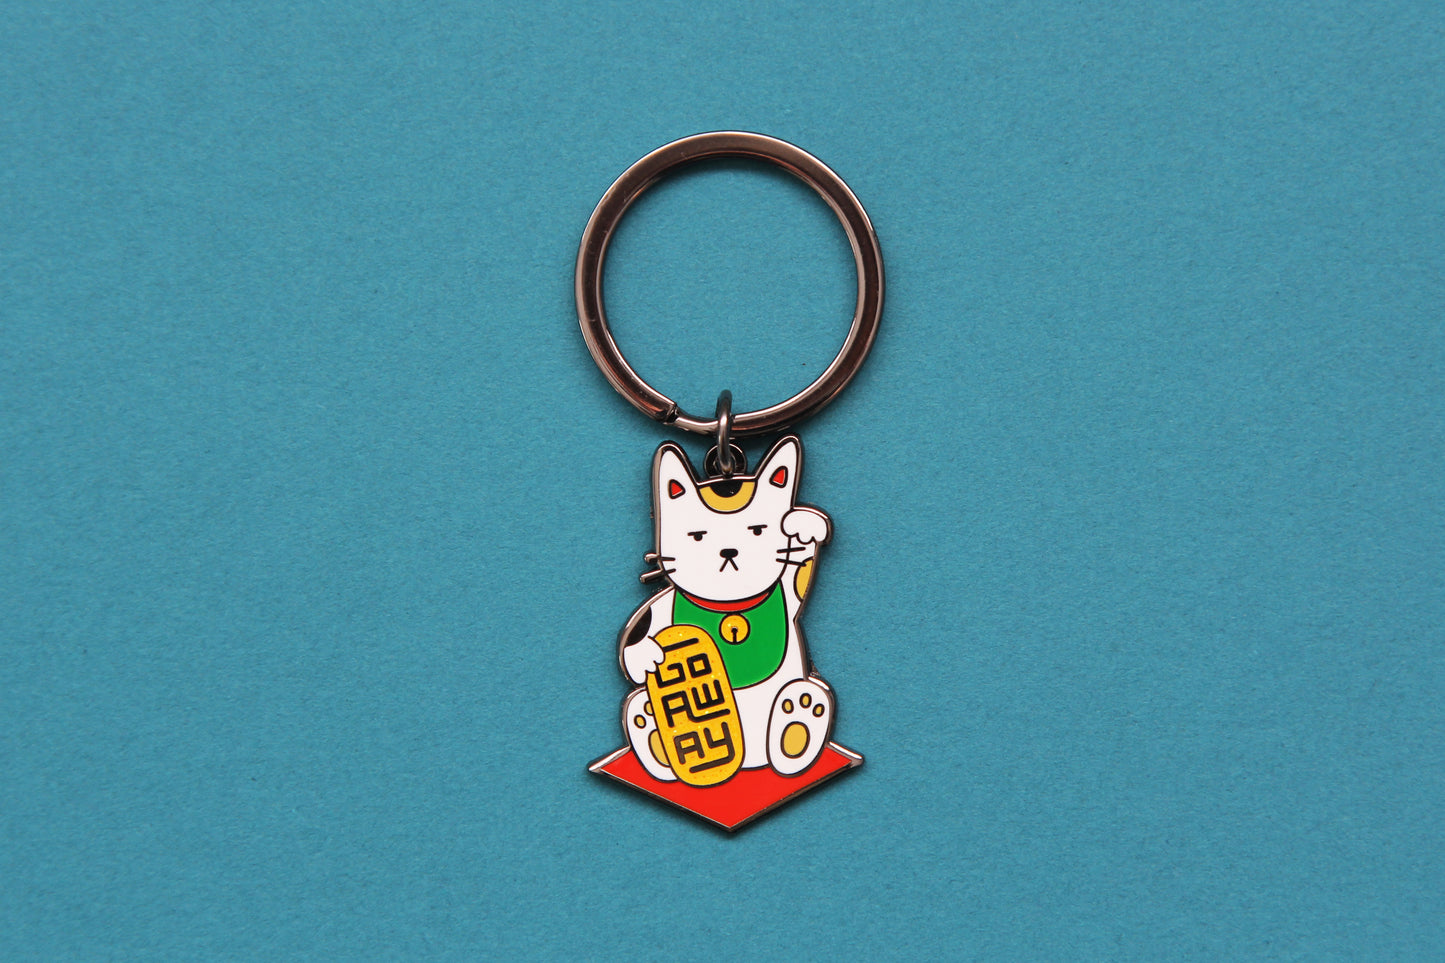 An enamel keychain showing maneki neko cat holding a glittery gold bar that says "Go Away" over a teal background.